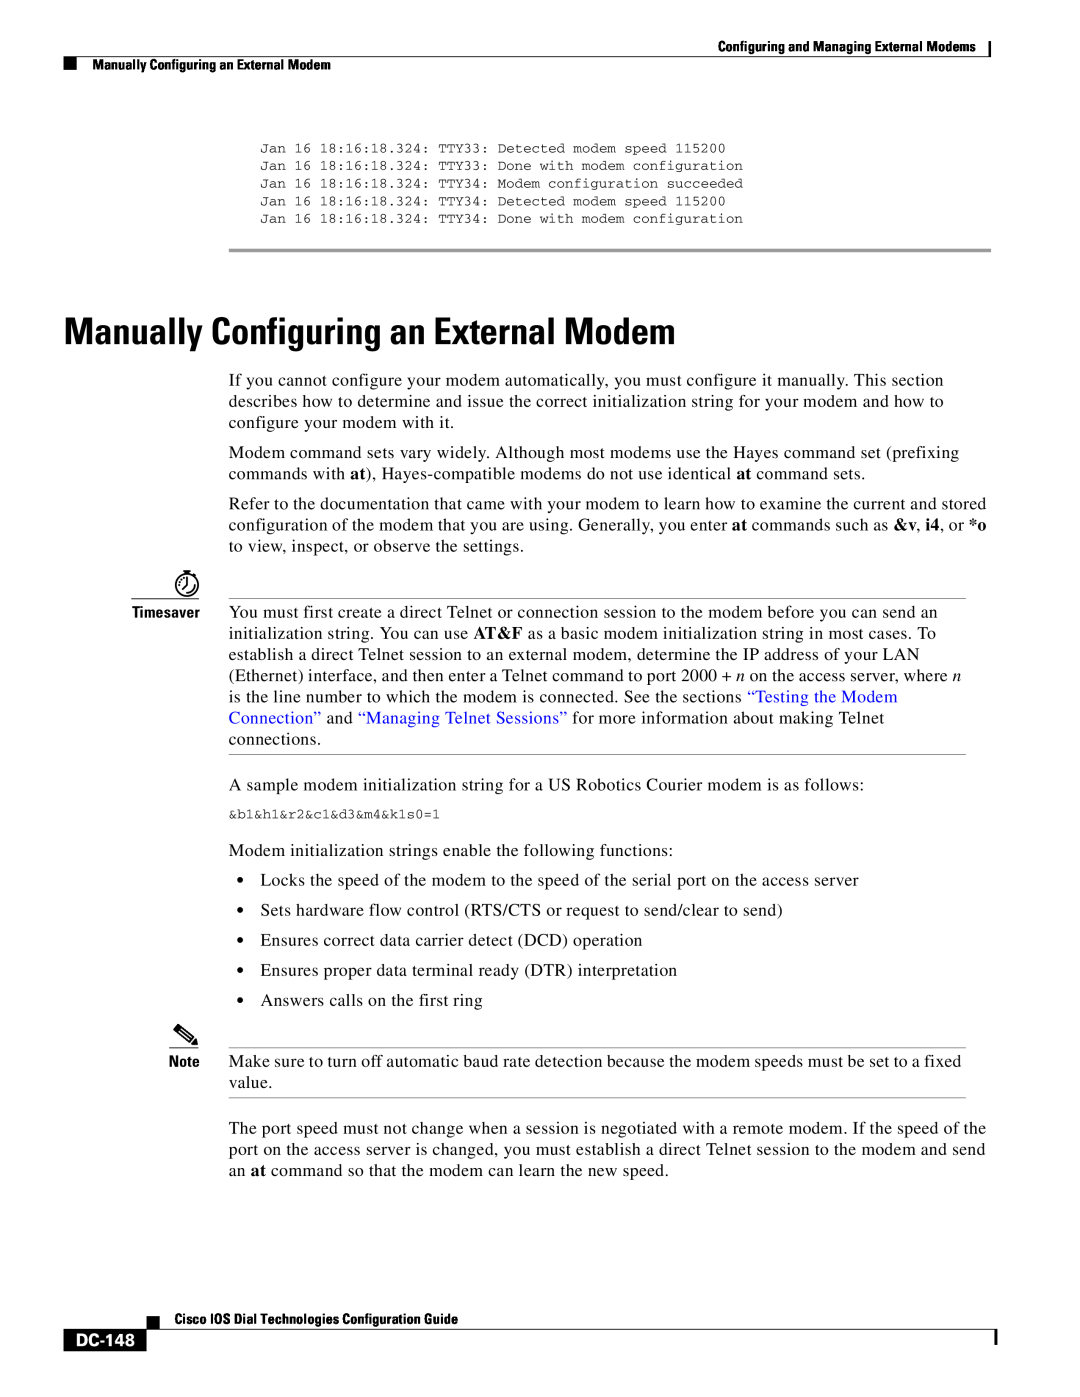 Cisco Systems DC-145 manual Manually Configuring an External Modem, DC-148 